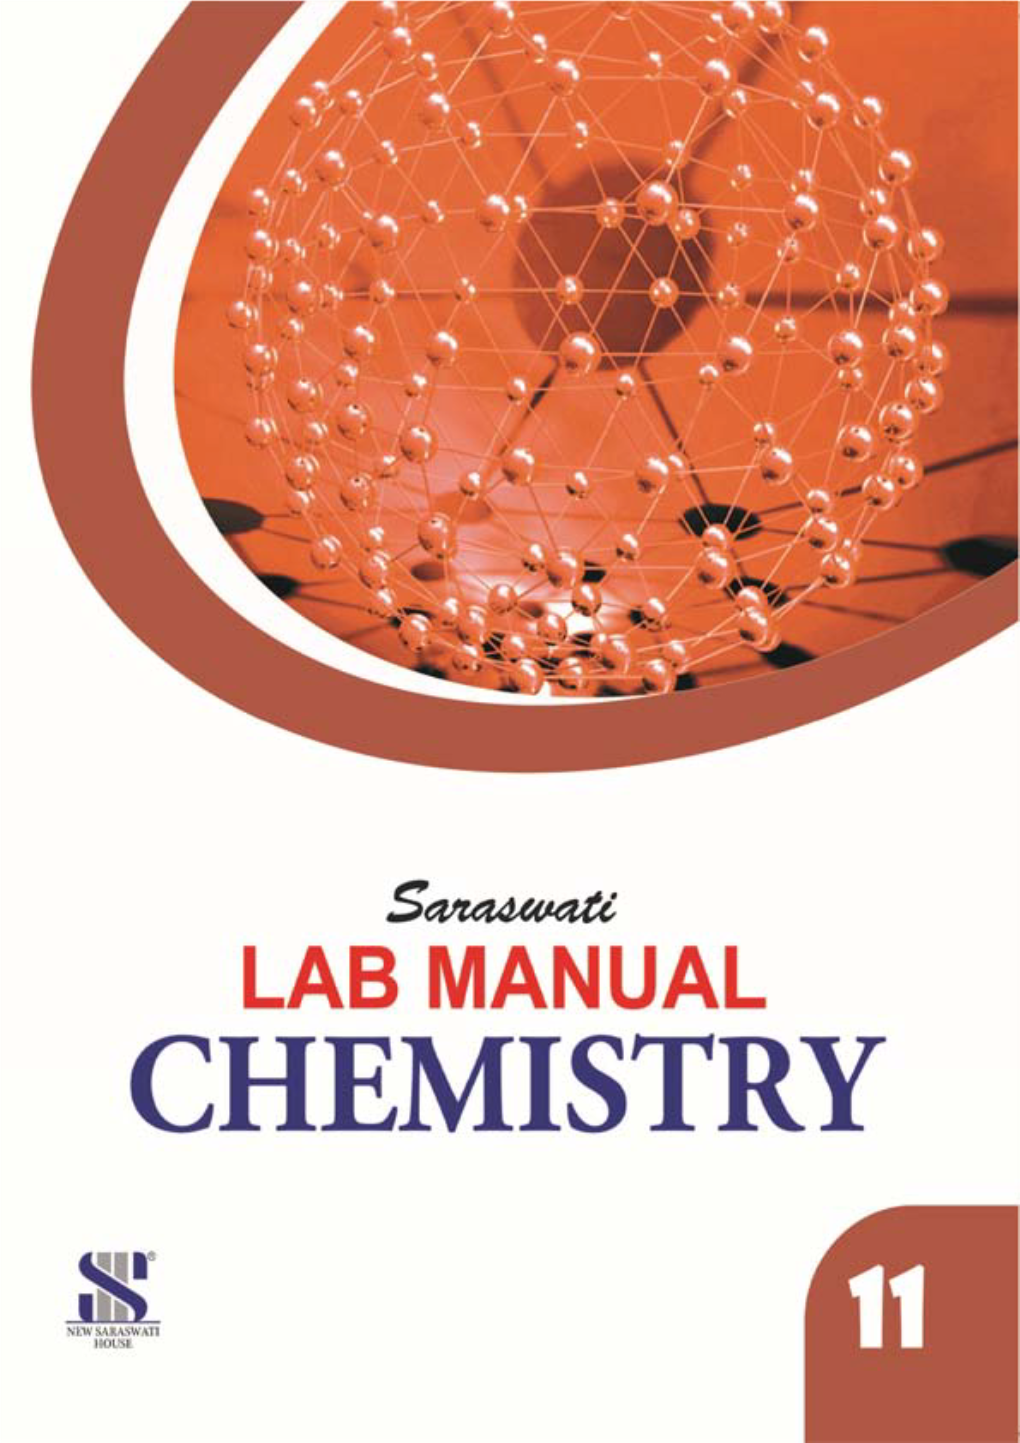 Saraswati LAB MANUAL CHEMISTRY